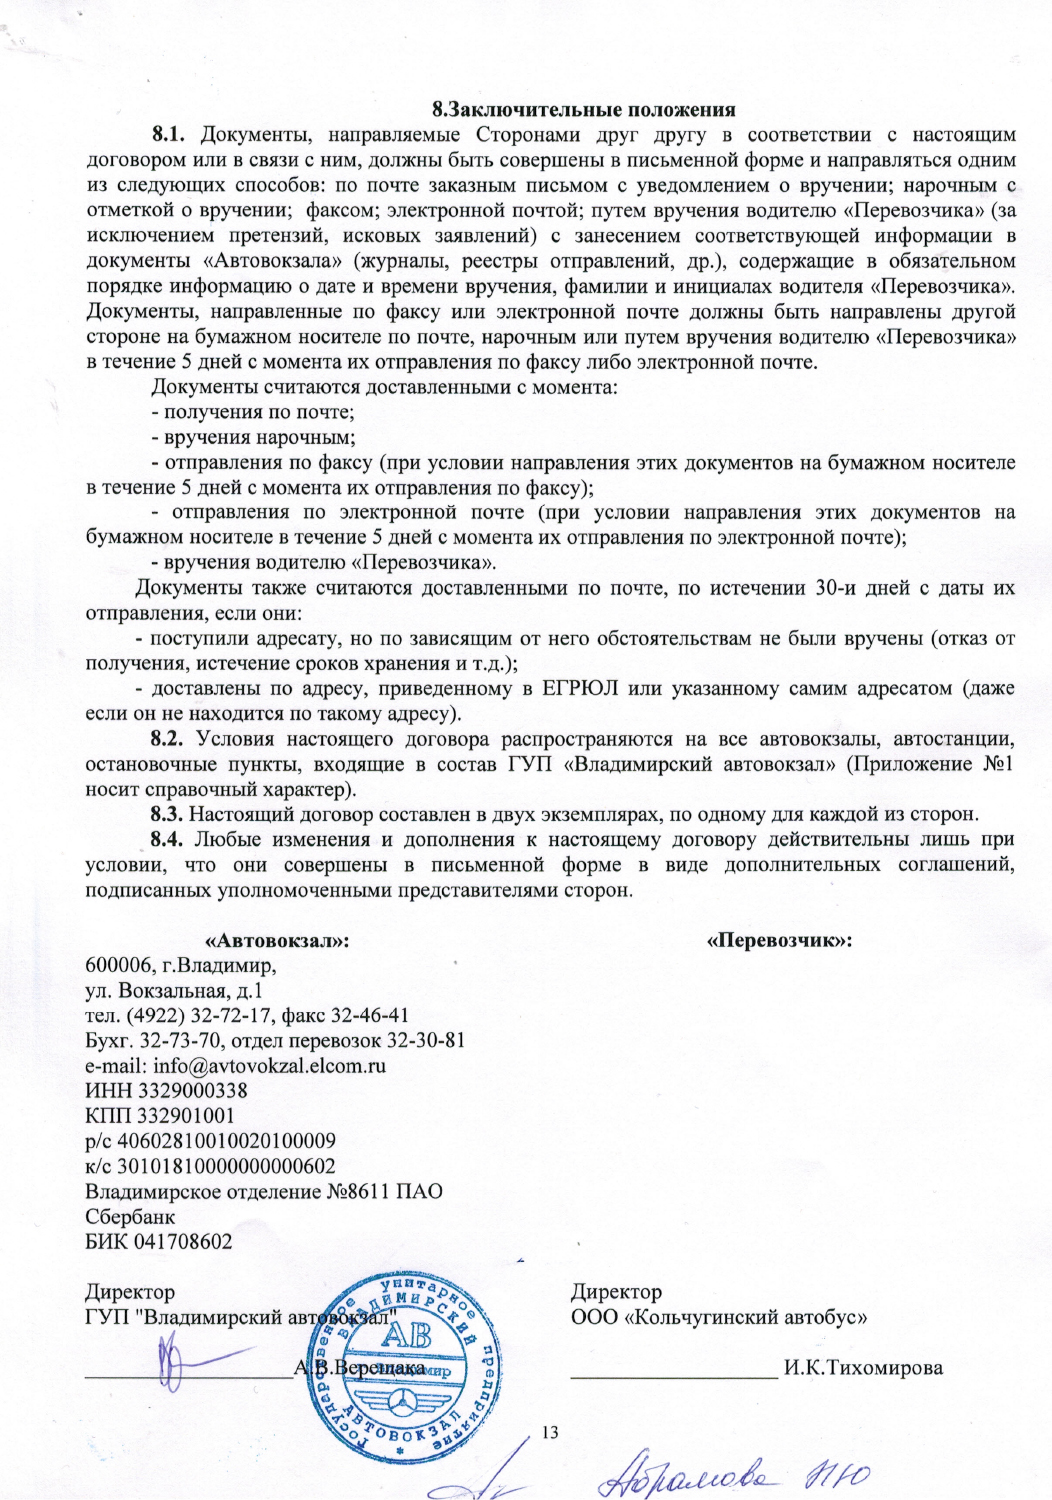 Договор ГУП владимиский вокзал-13.jpg